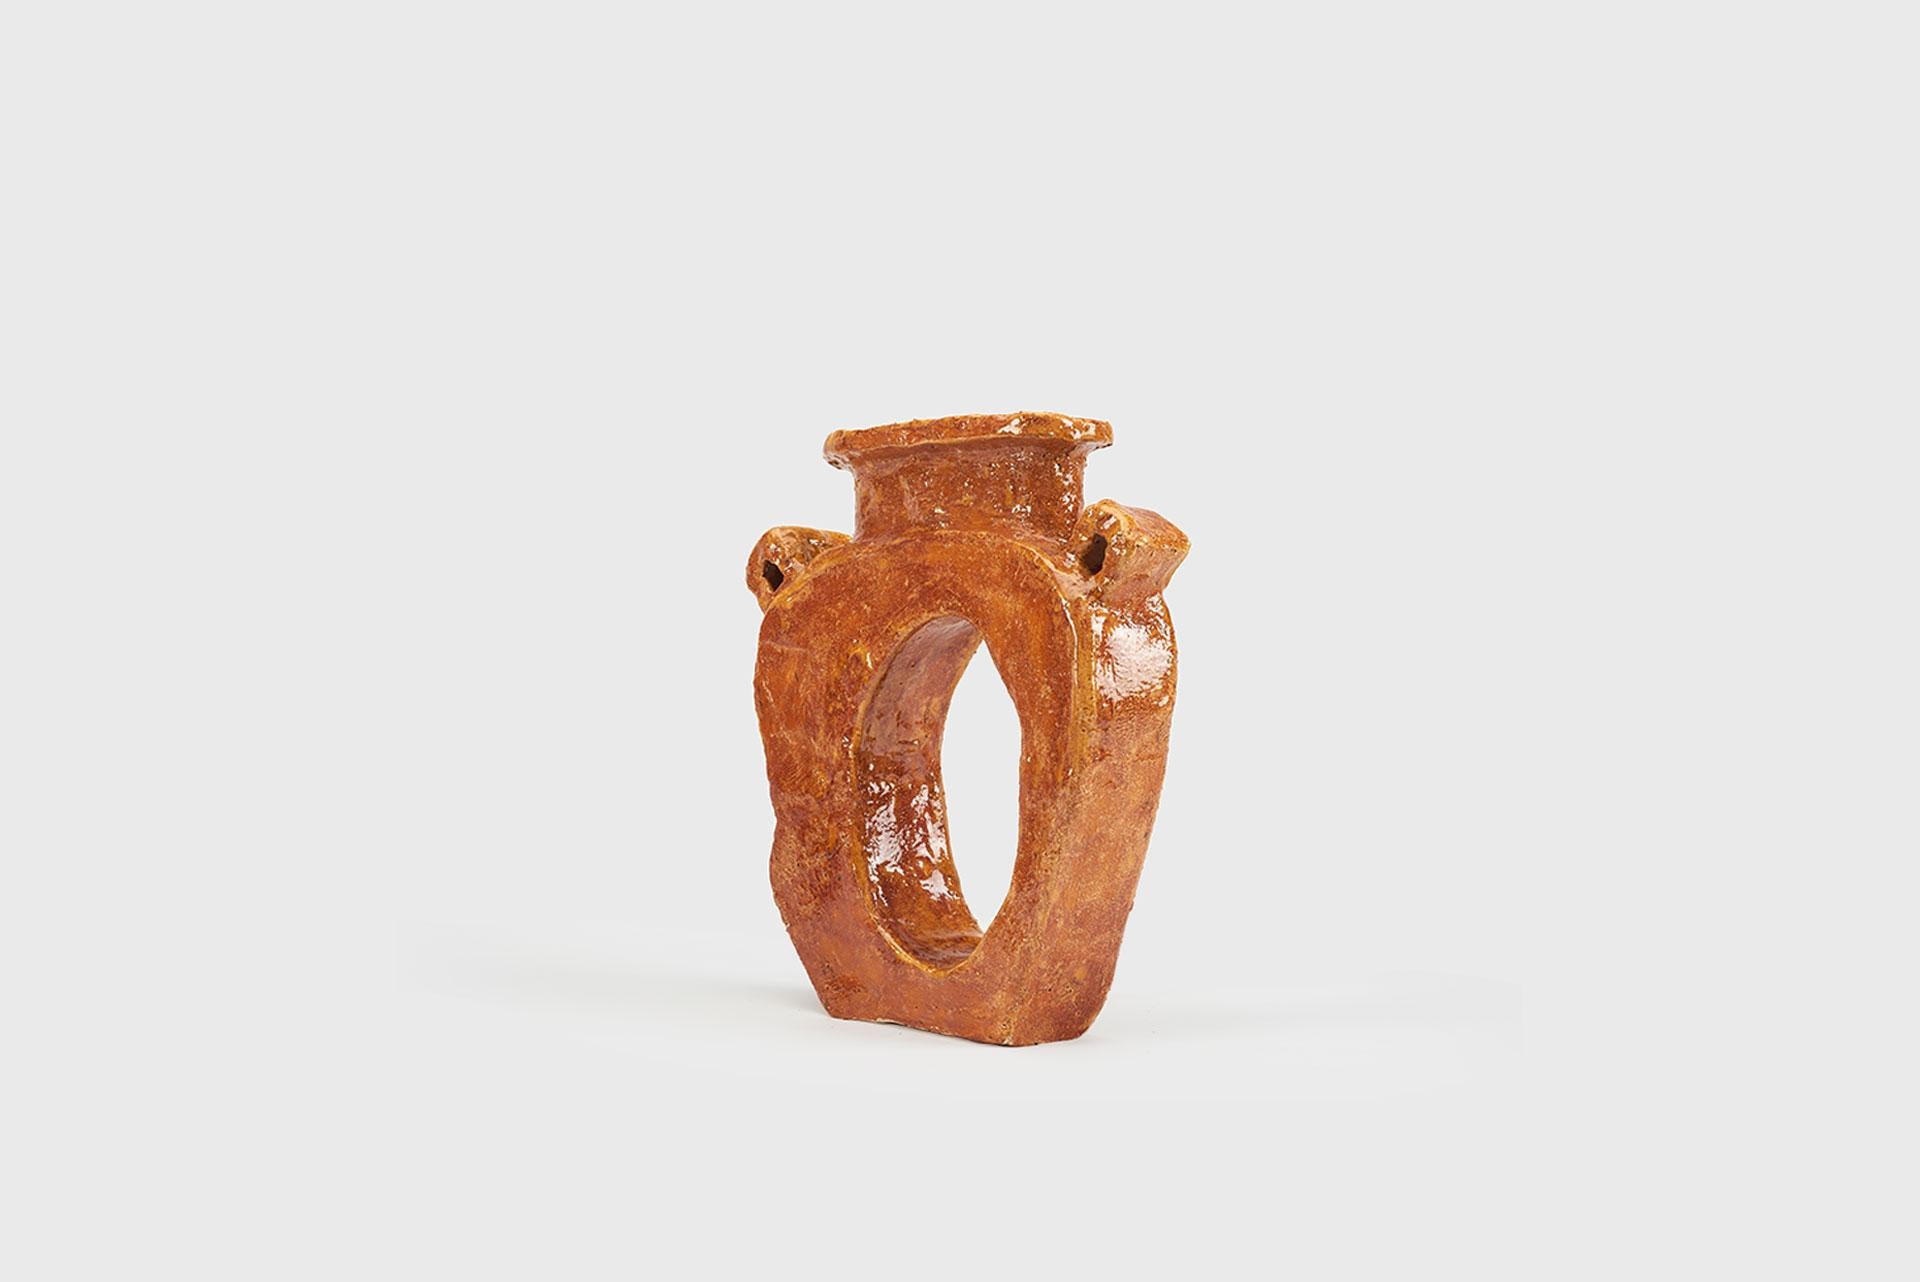 Ceramic vase model “Illa”
From the series 